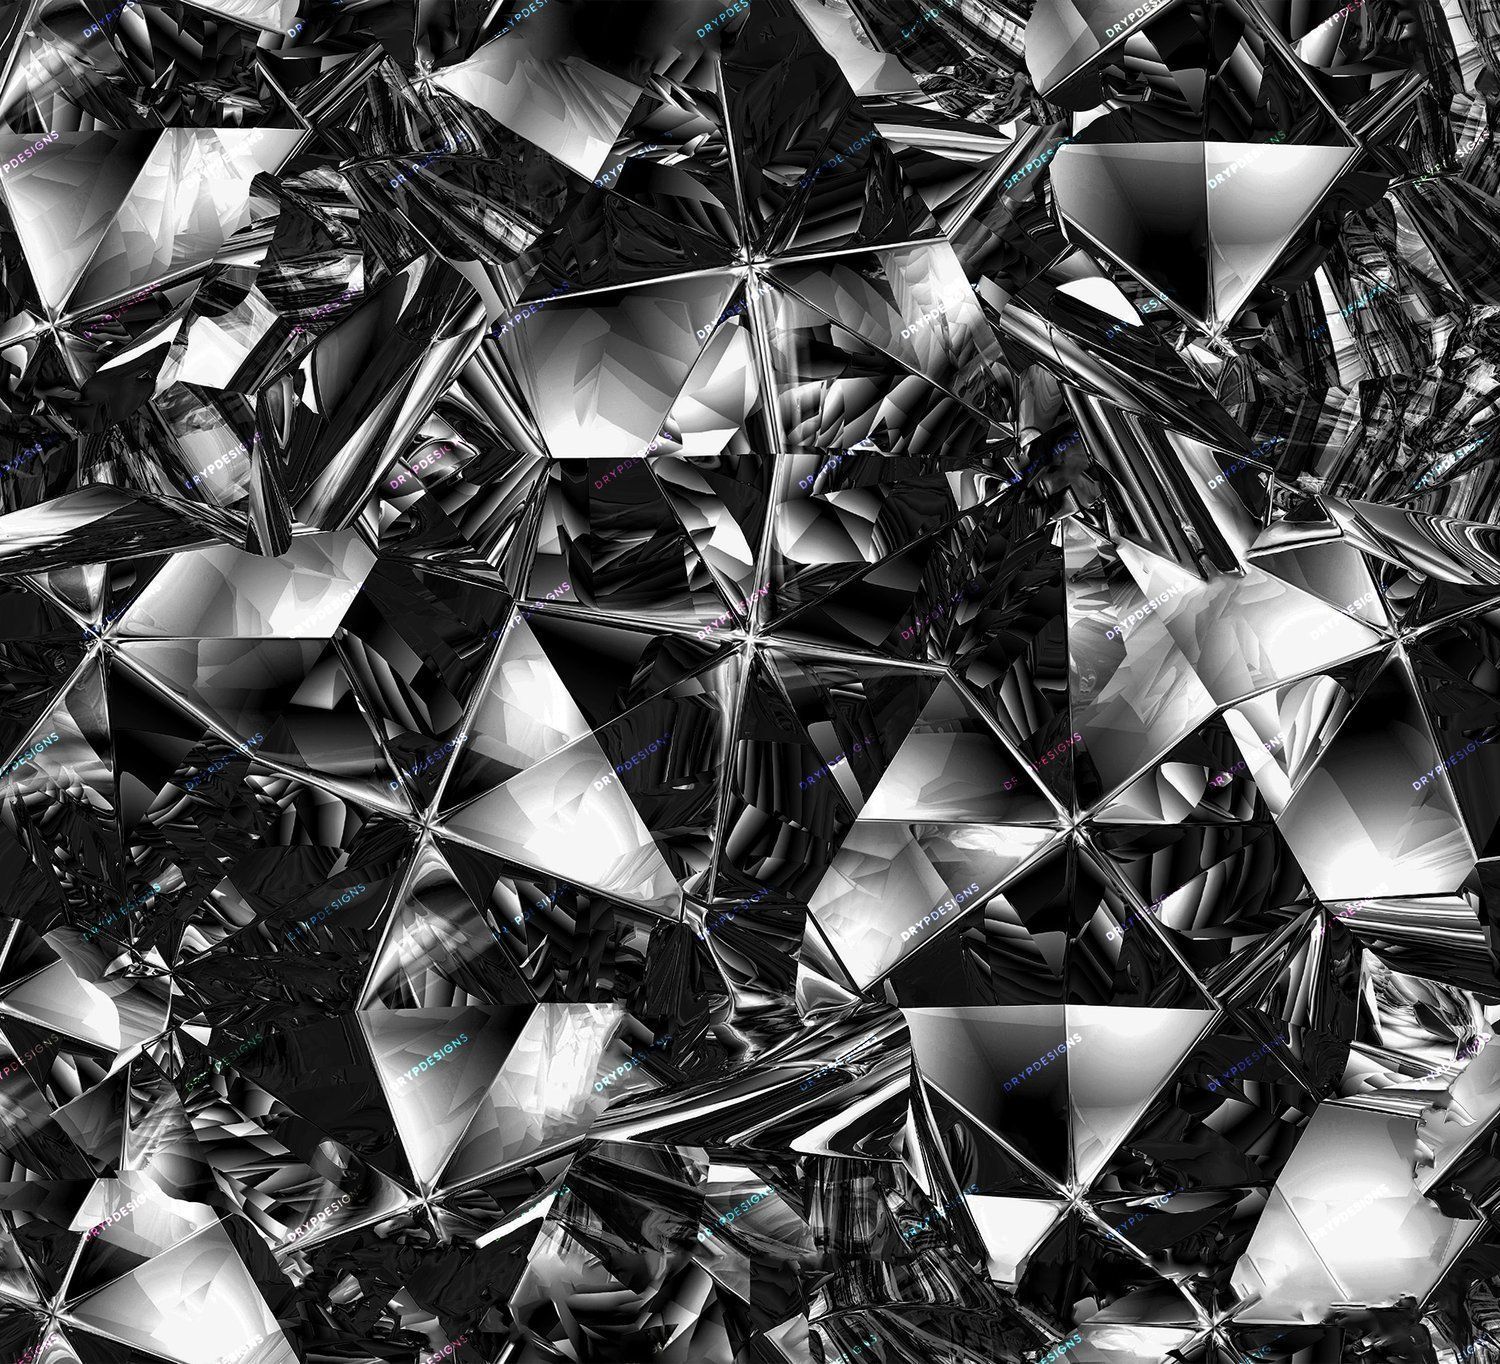 A black and white image of broken glass - Diamond